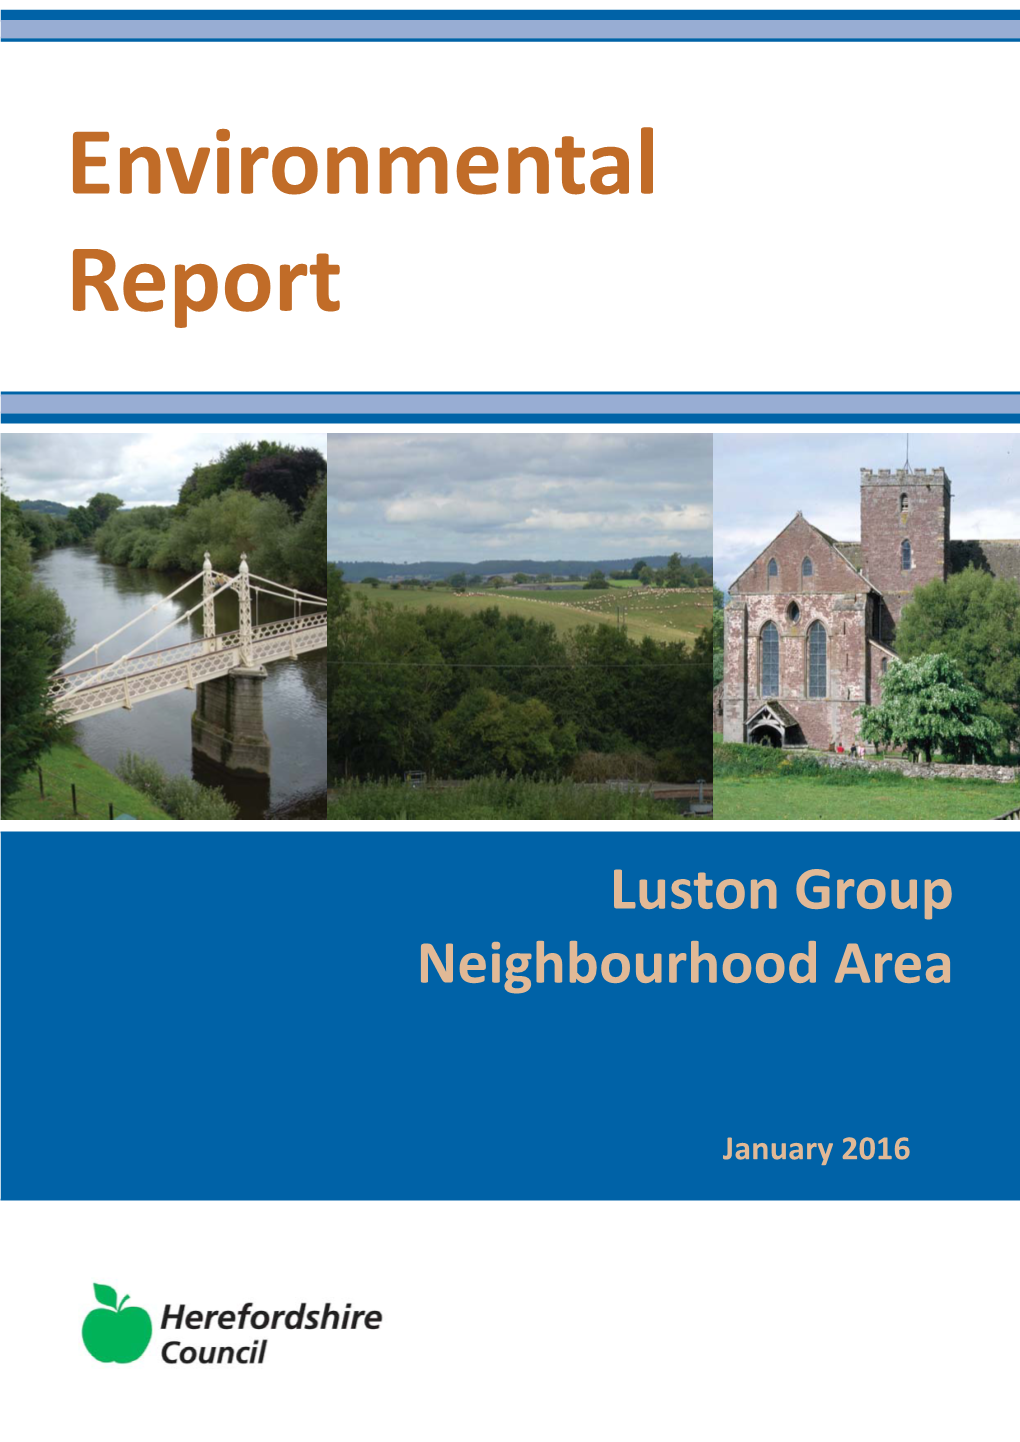 Luston Group Environmental Report (January 2016) ______